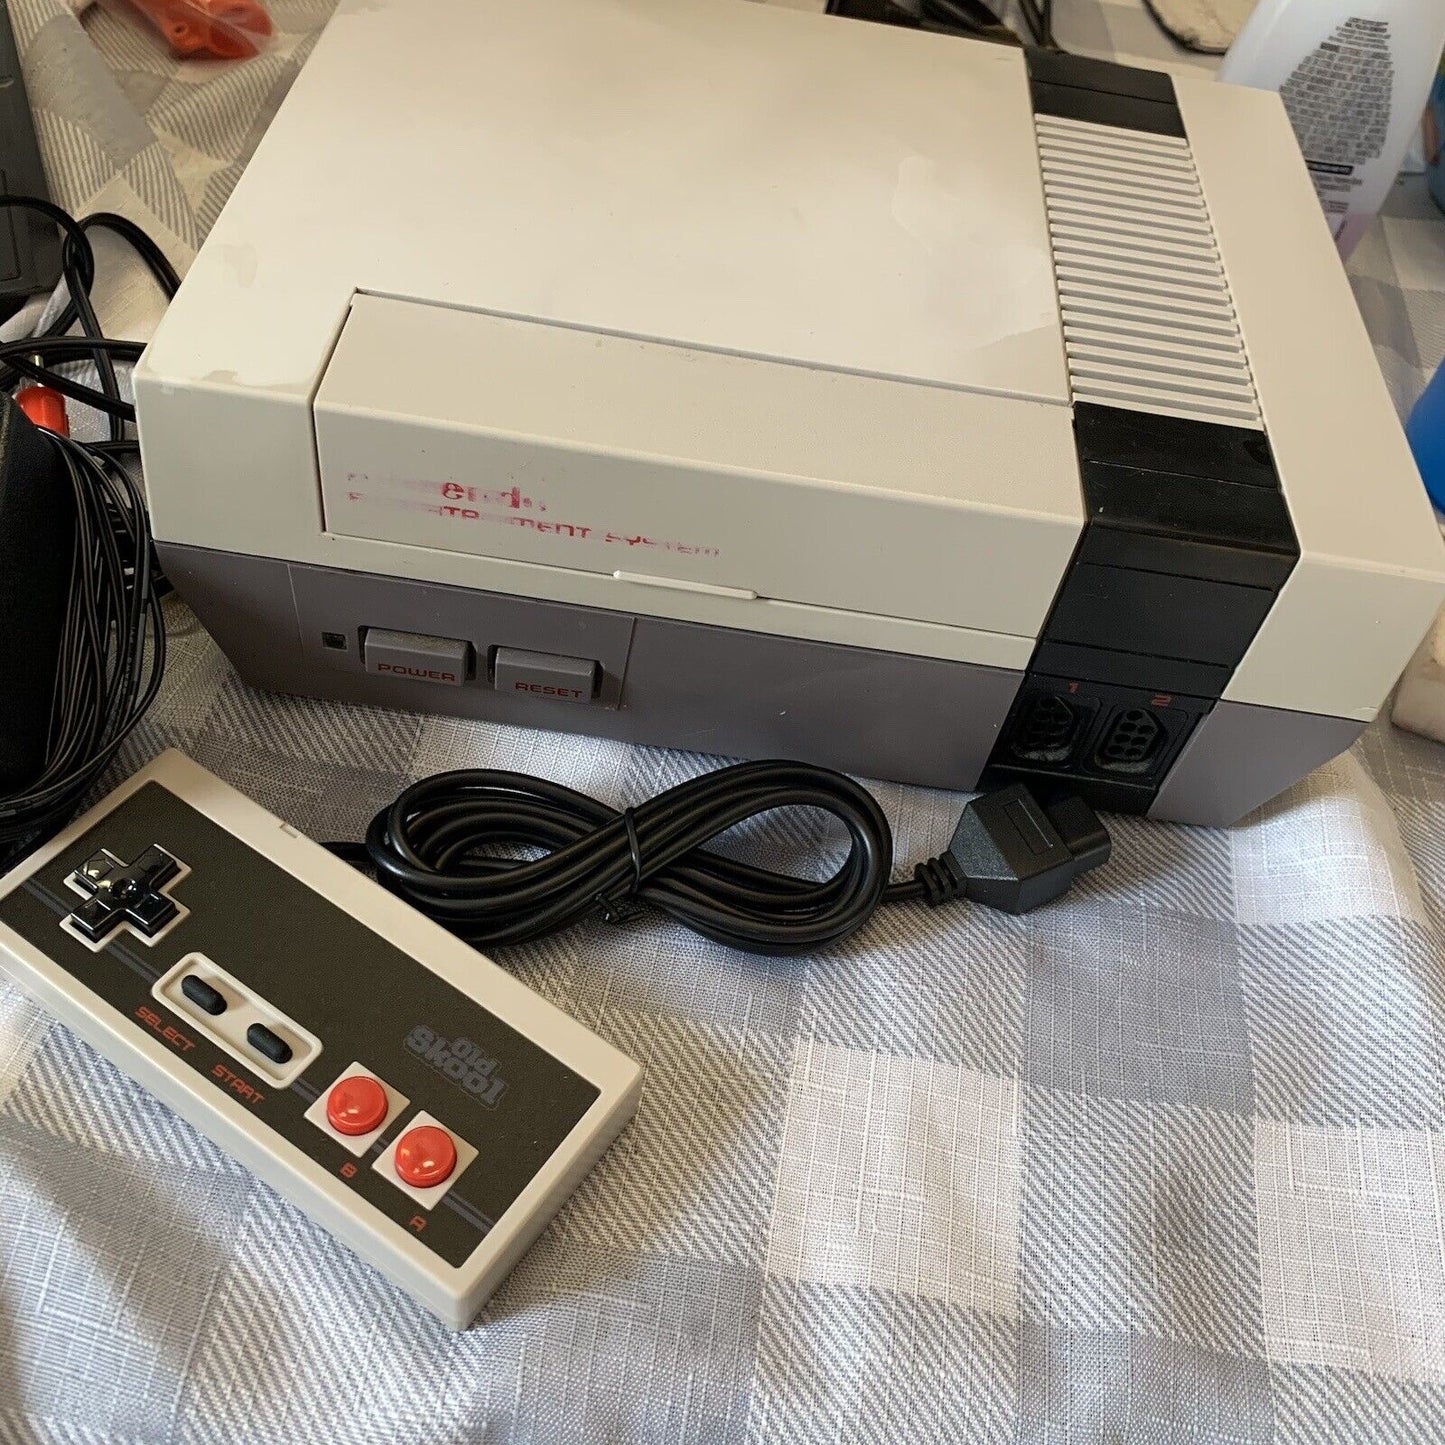 Nintendo NES Action Set Home Console - White/Gray